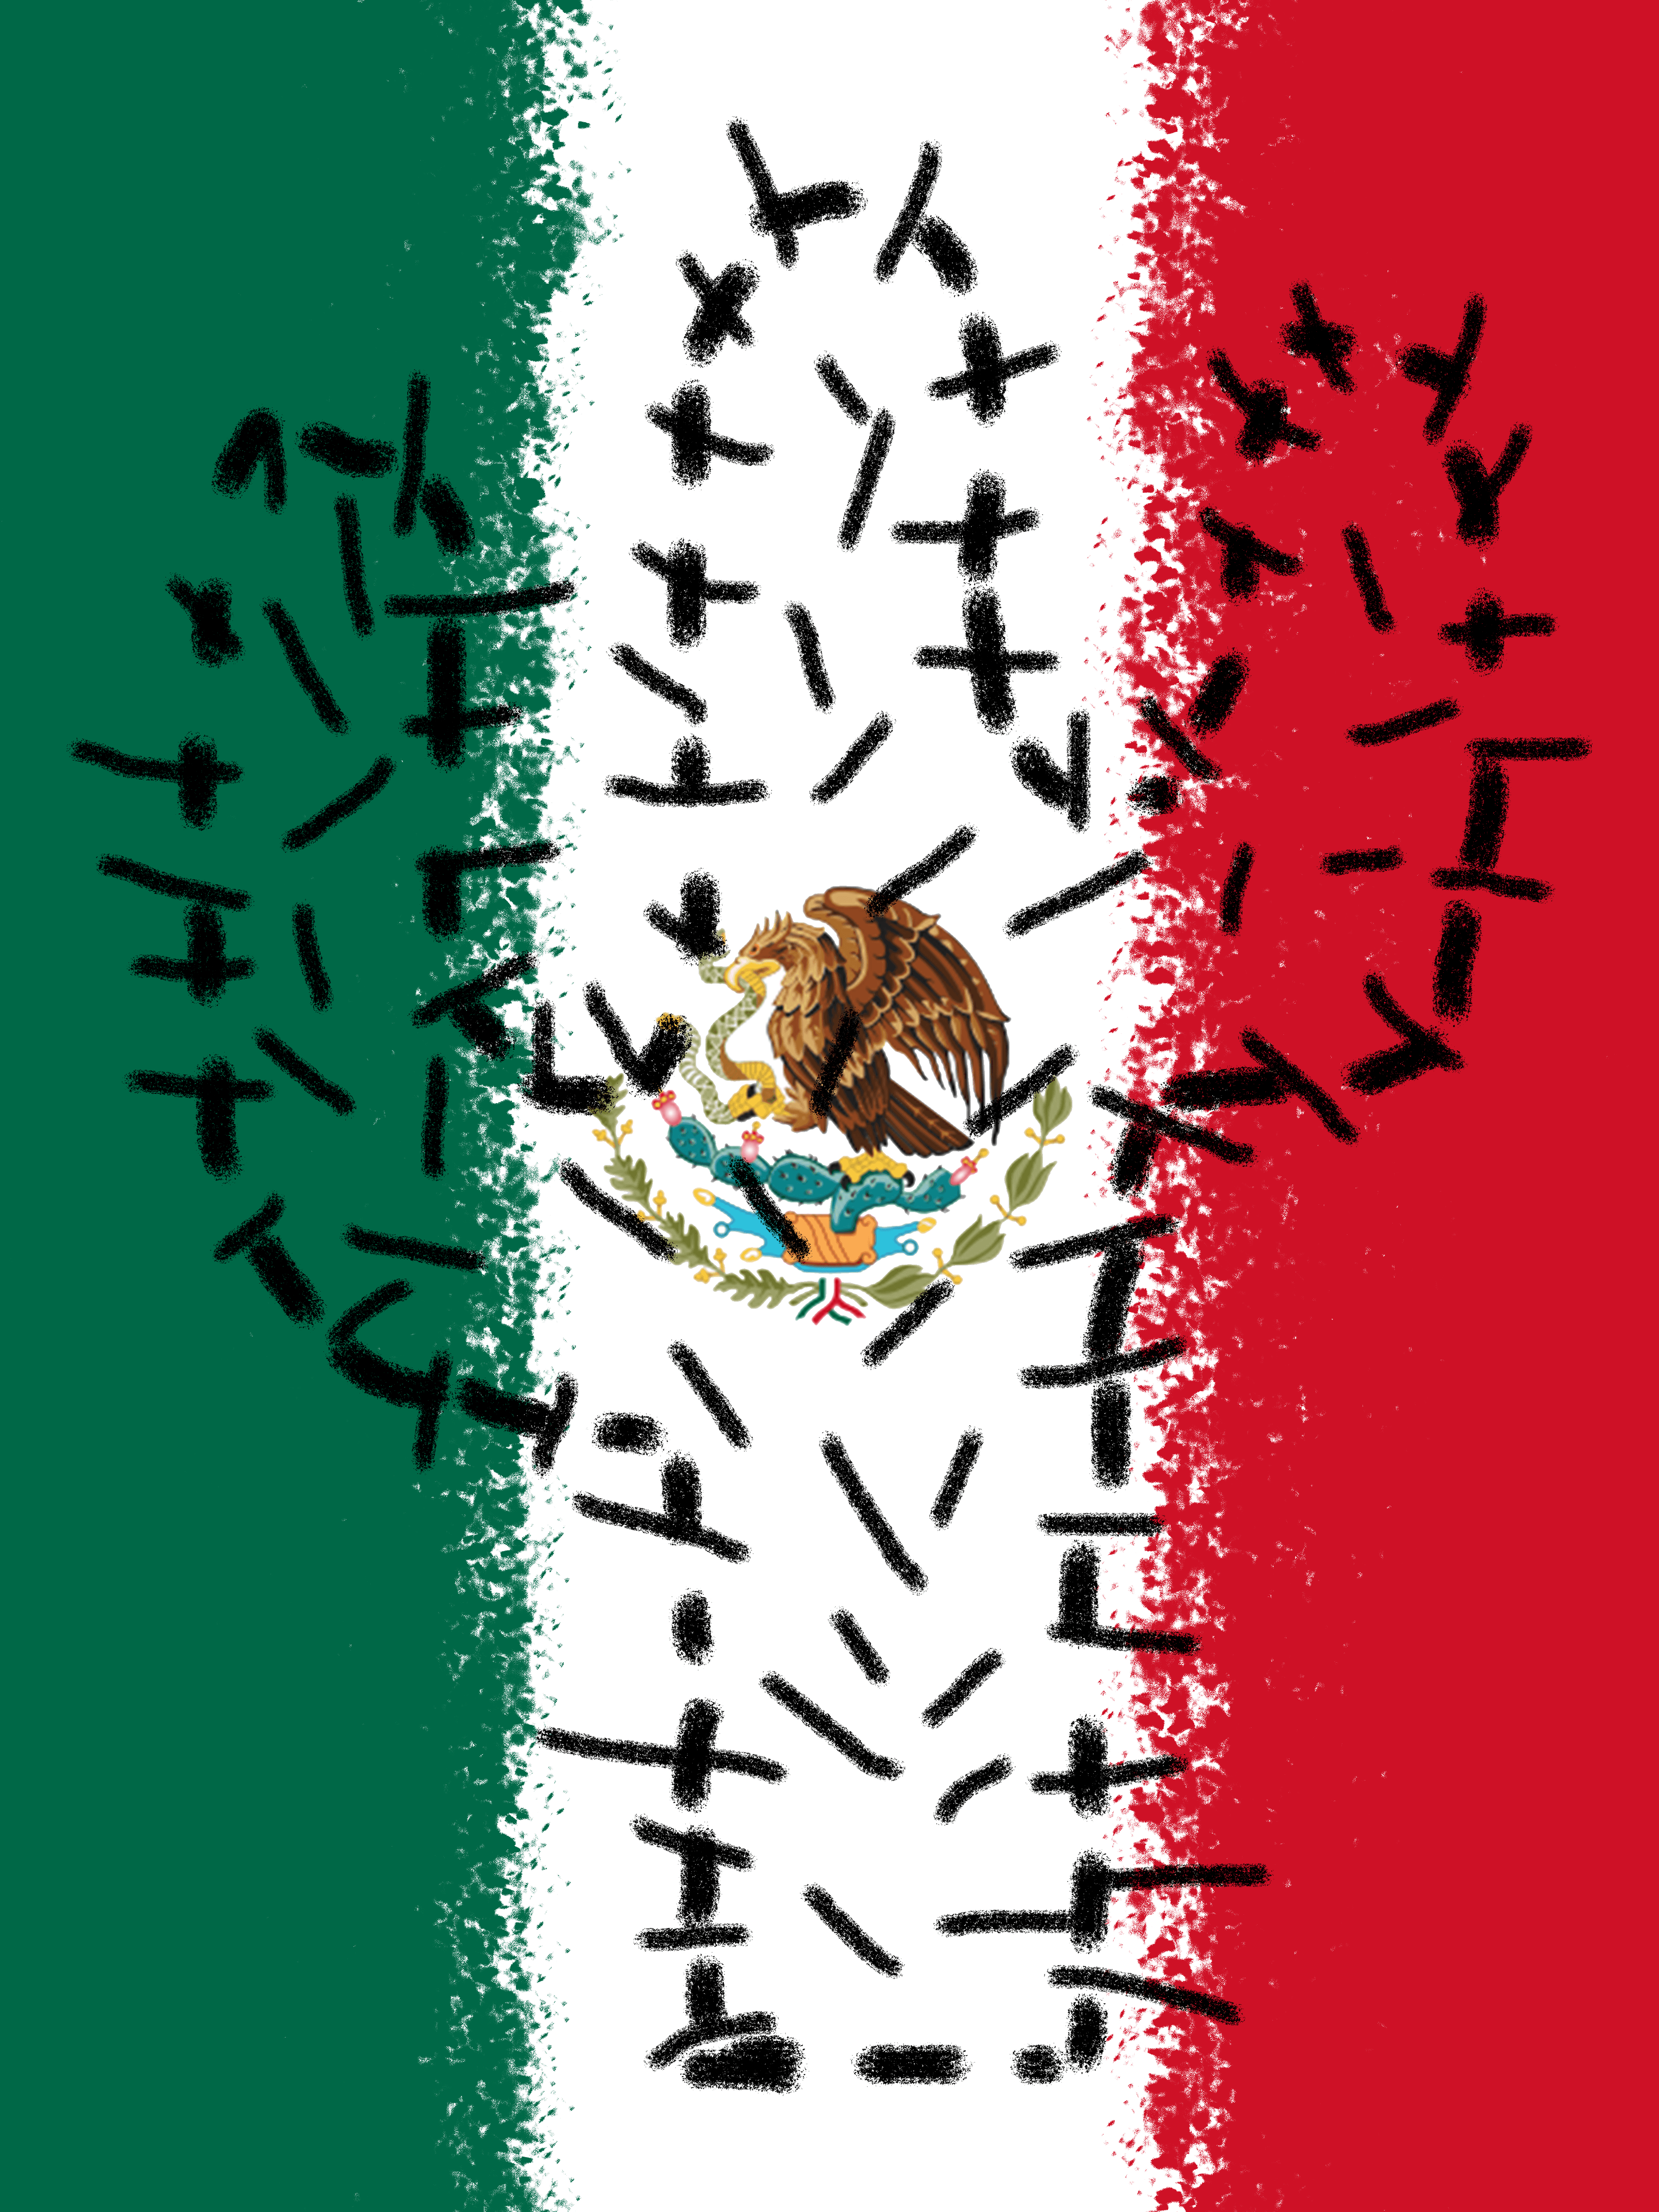 16 # Country Symbol : Mexico - Cactus